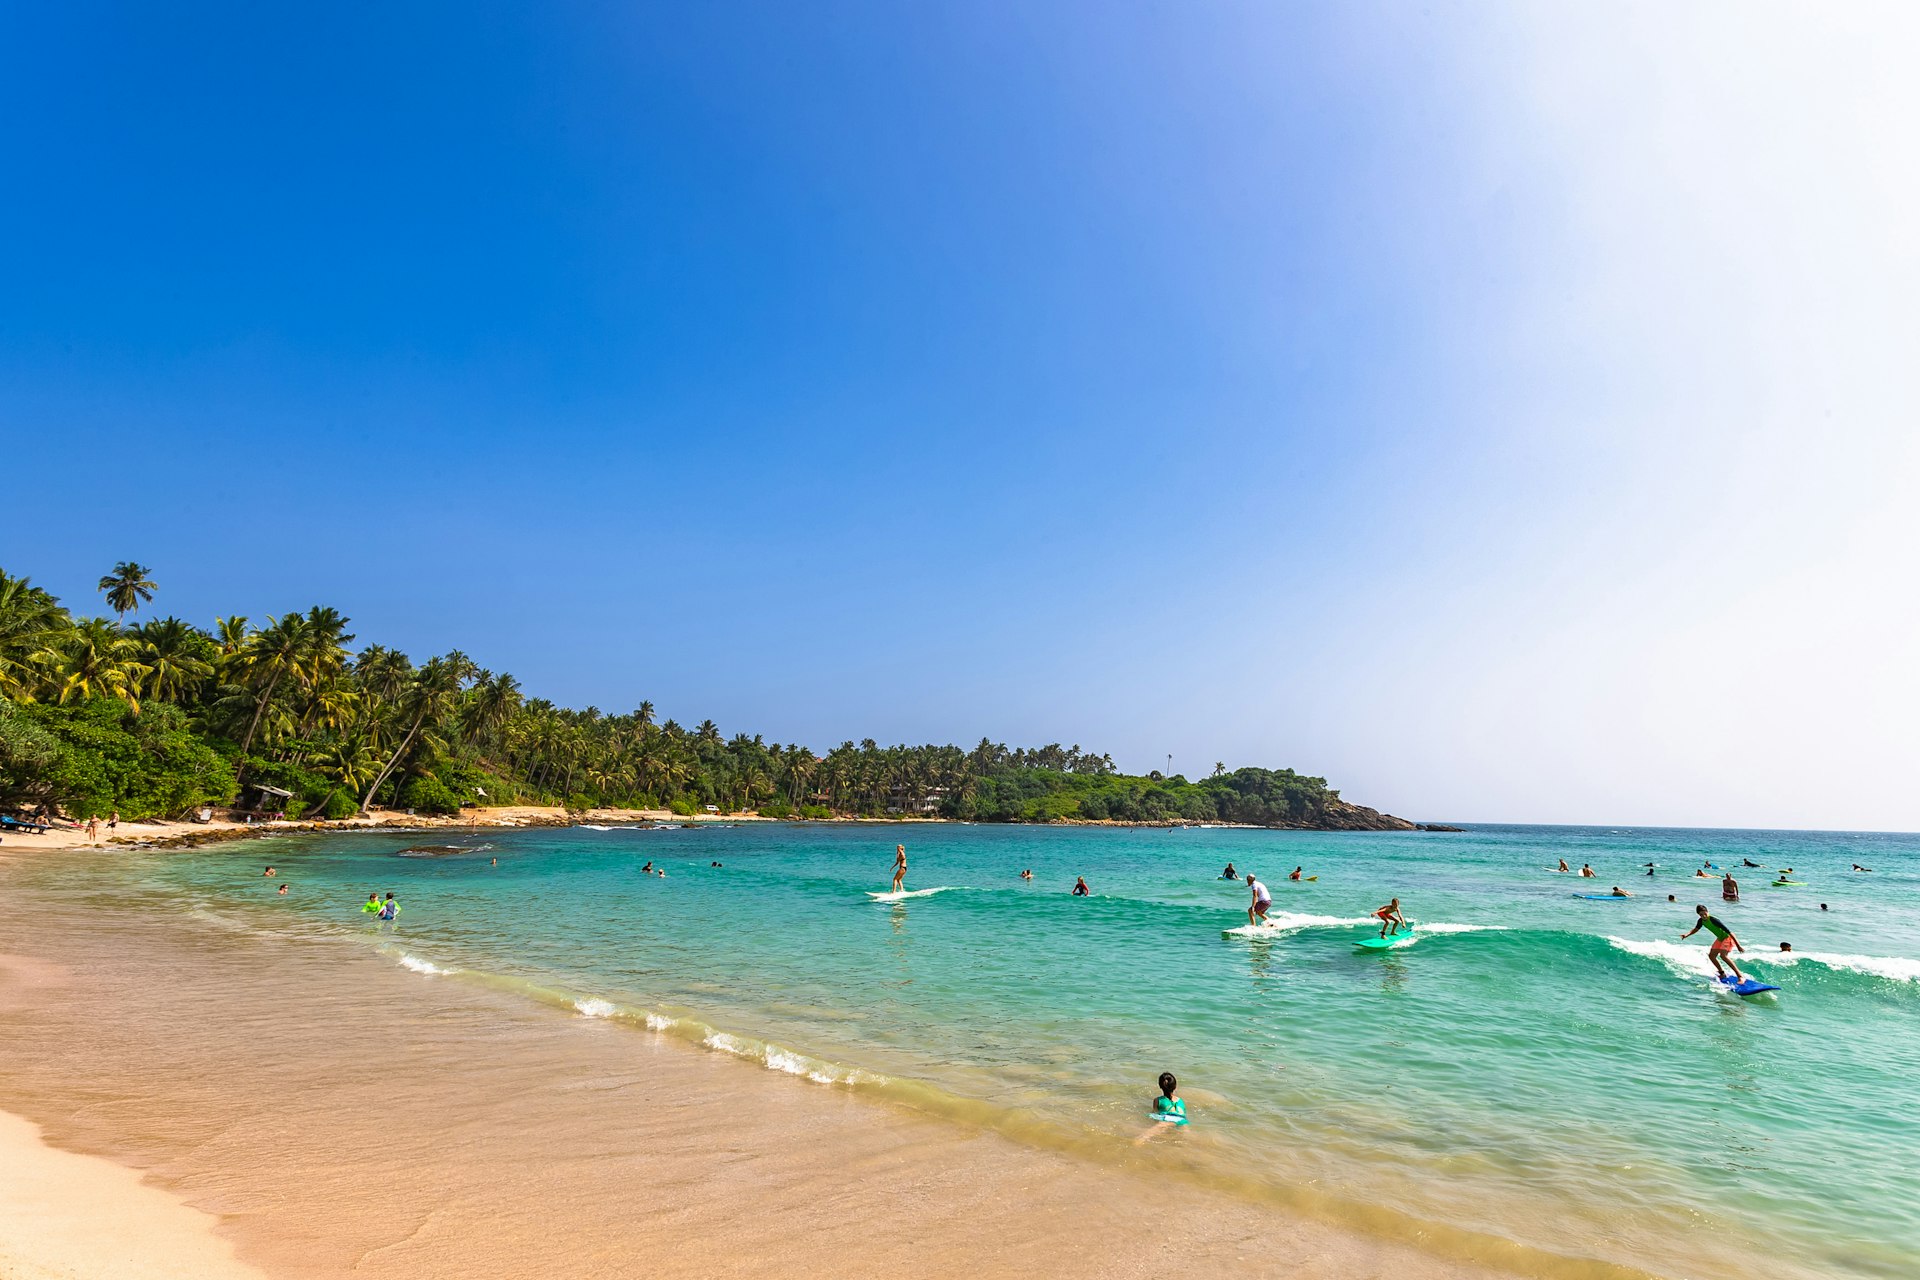 People riding waves at surf beach in Hiriketiya, Dikwella, Sri Lanka.